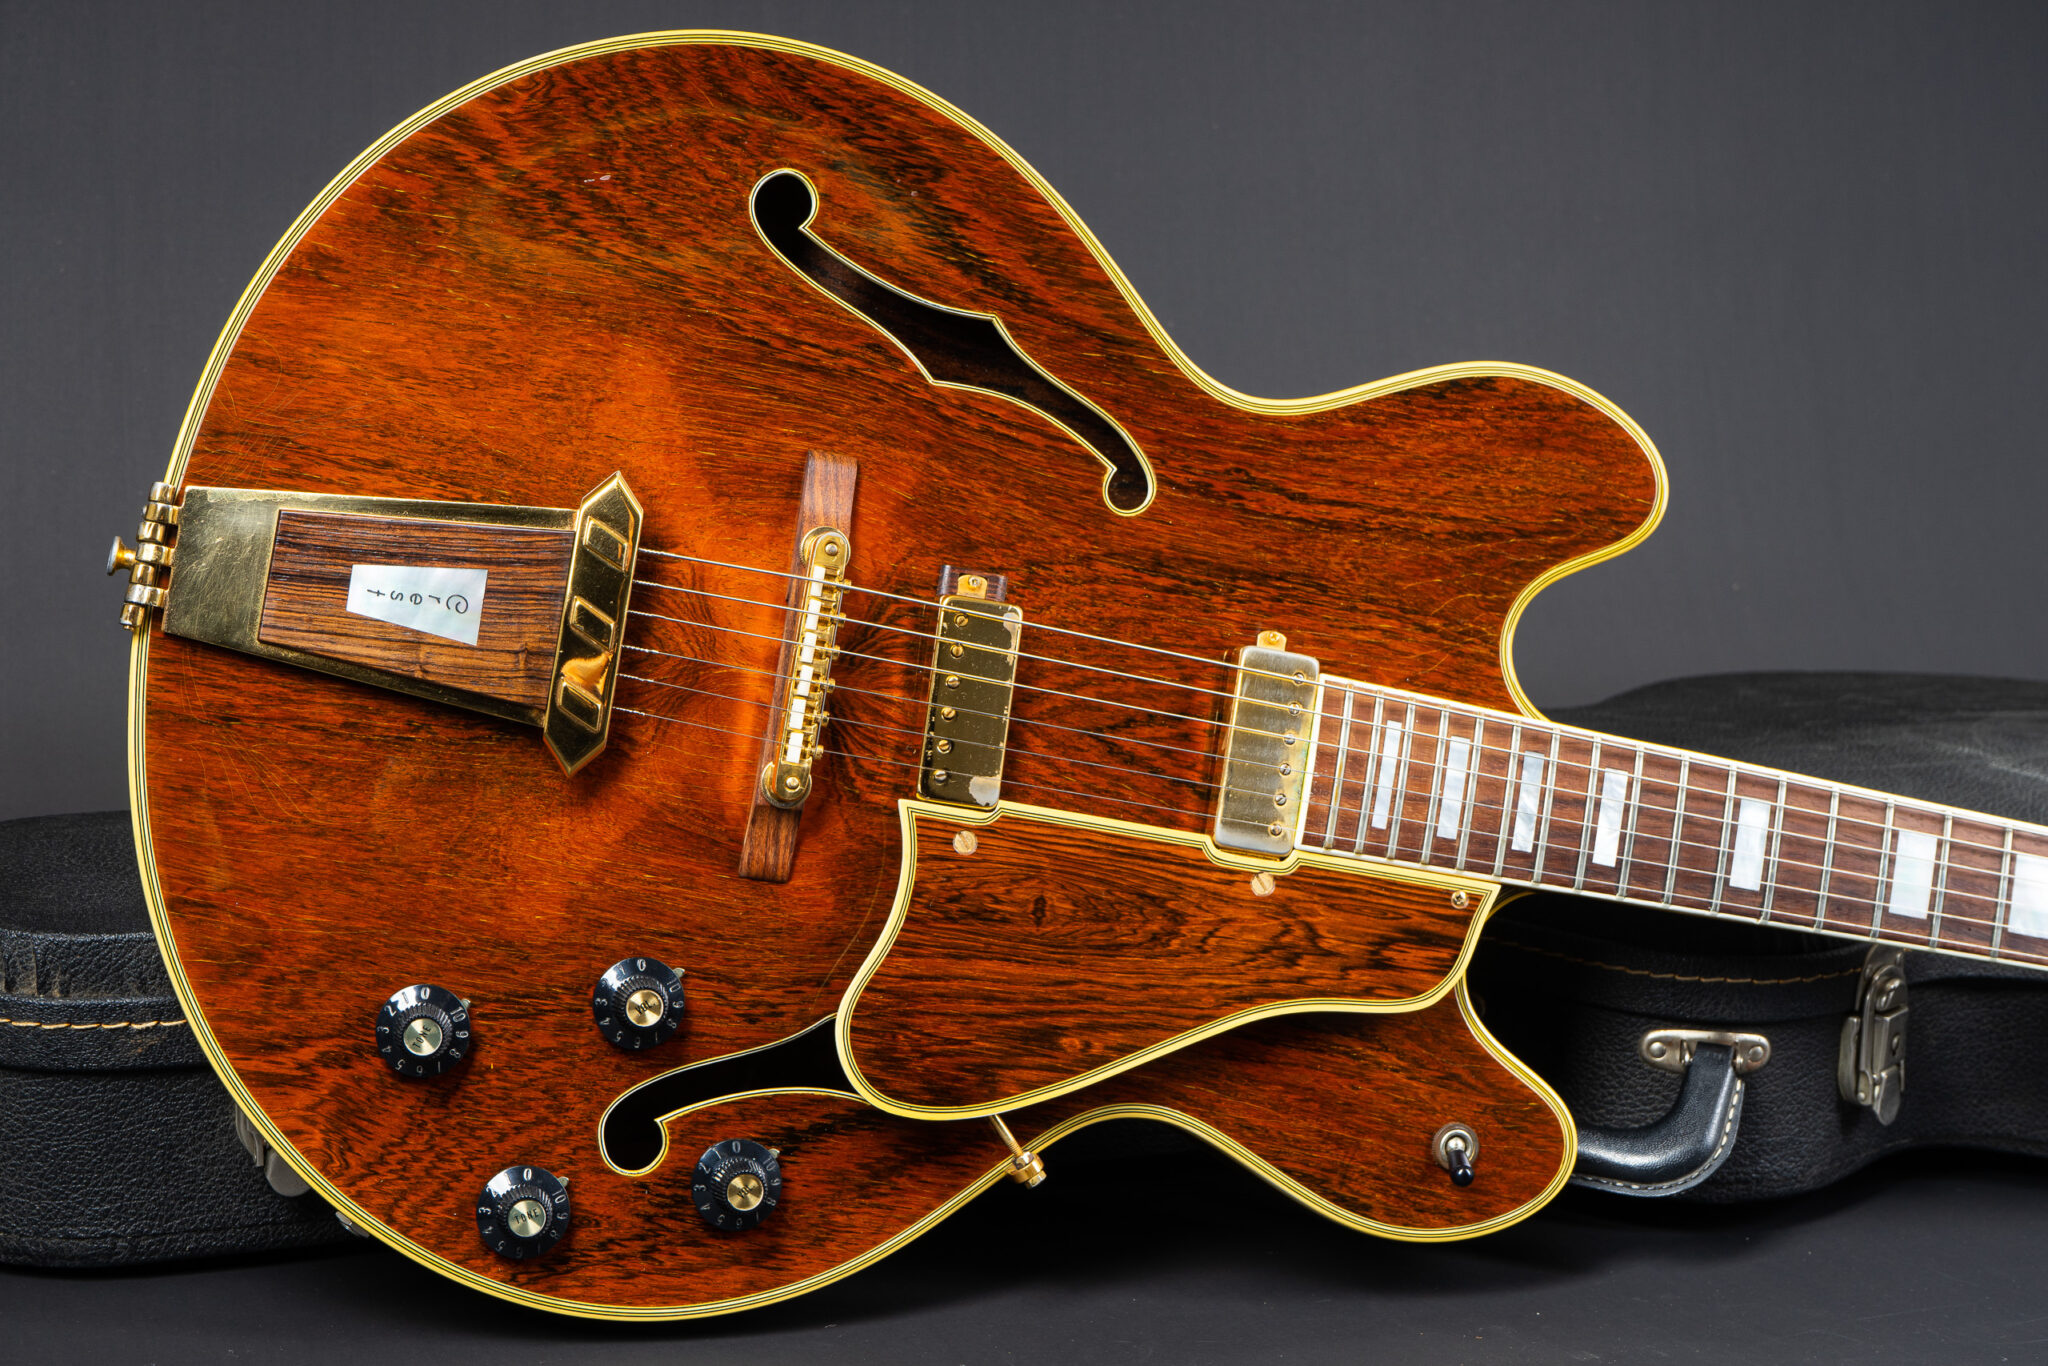 https://guitarpoint.de/app/uploads/products/1969-gibson-crest-gold/1969-Gibson-Crest-911571-8-2048x1366.jpg